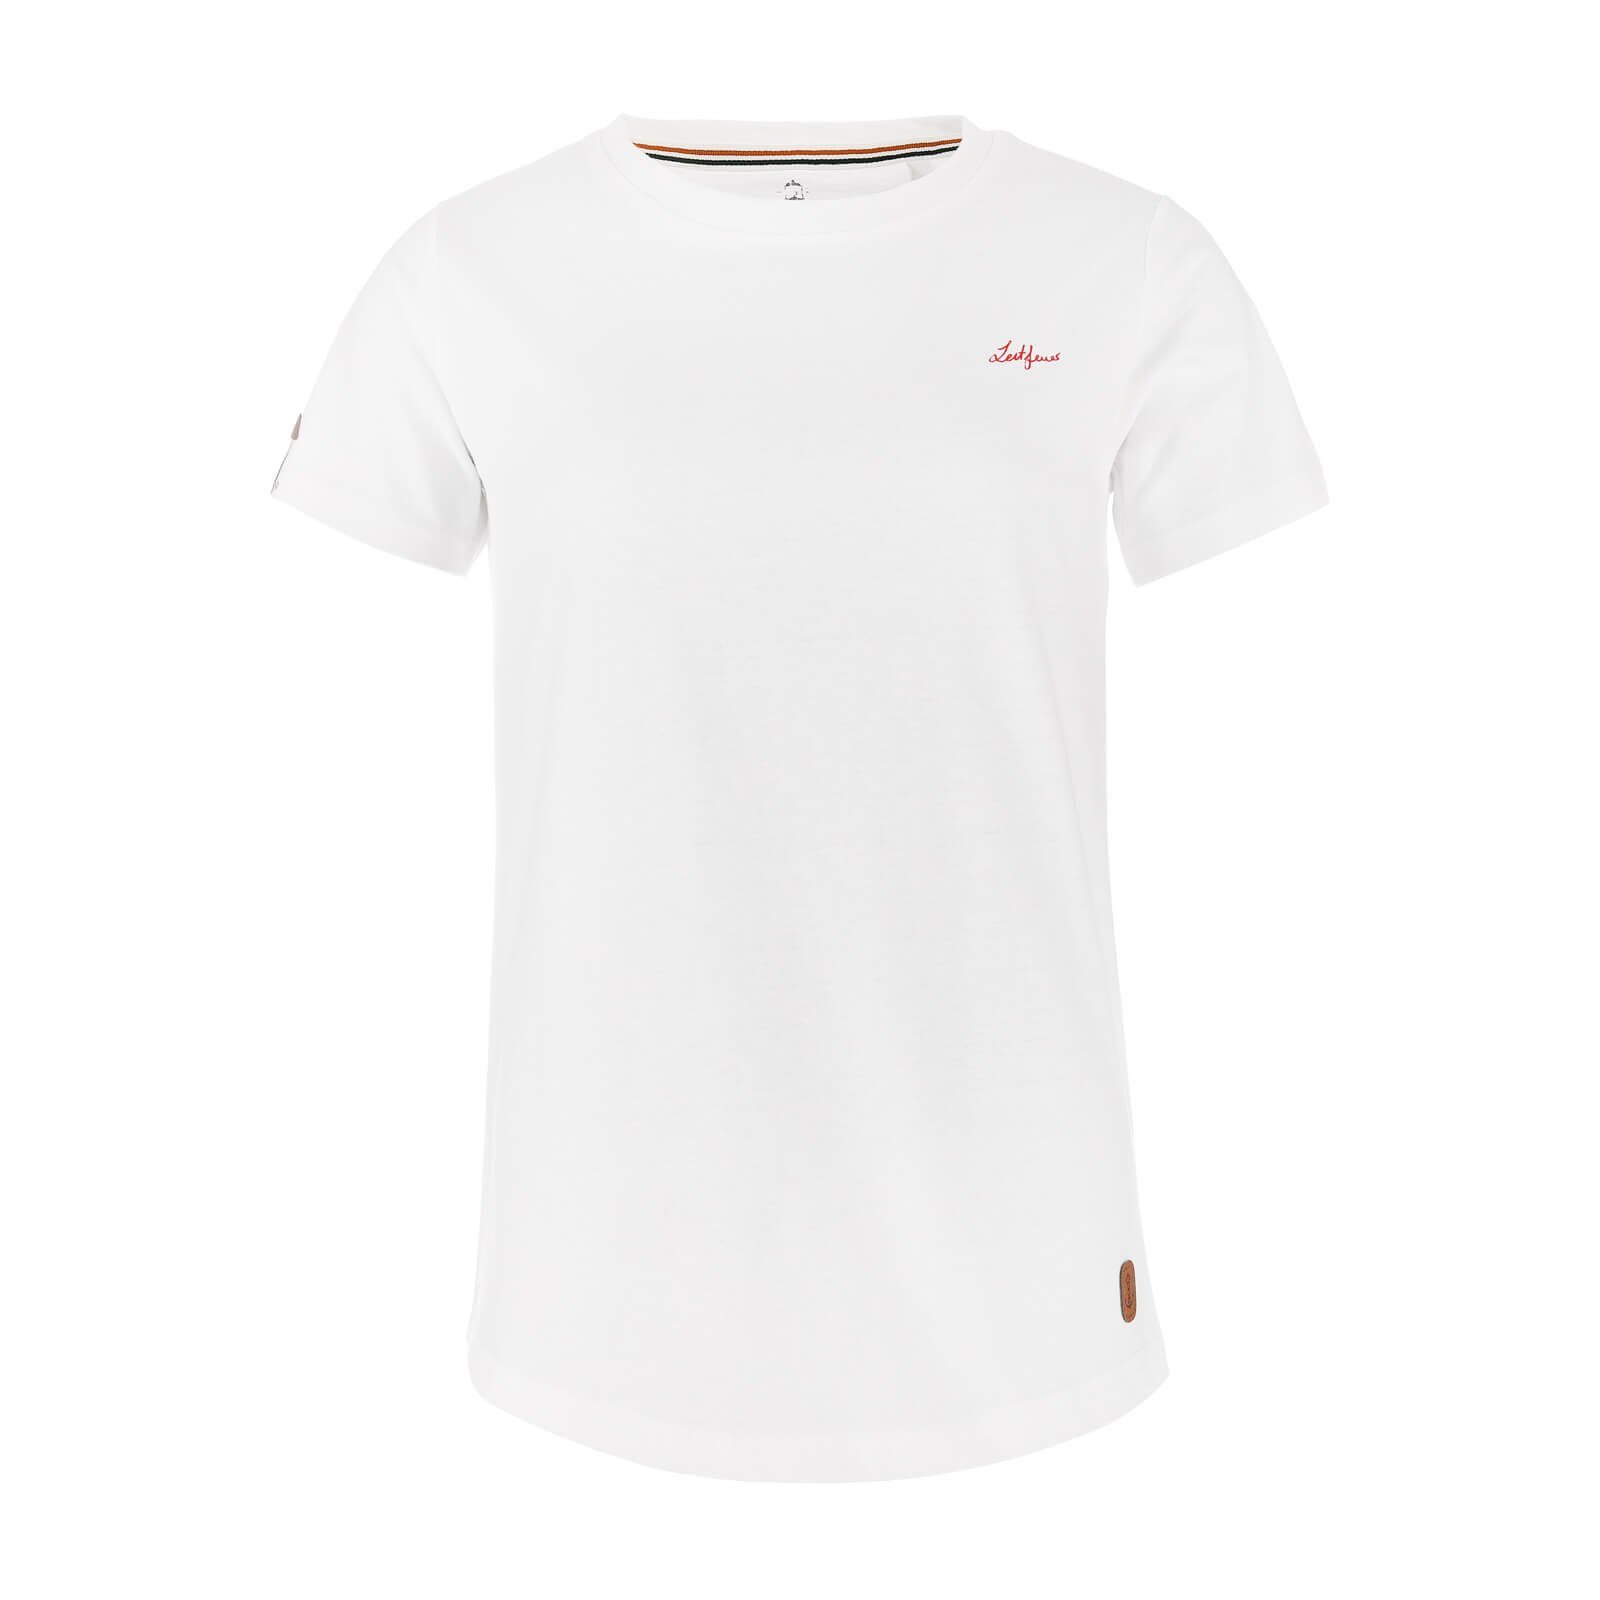 Leitfeuer T-Shirt Damen Kurzarmshirt - Rundhalsshirt einfarbig aus Baumwolle weiß